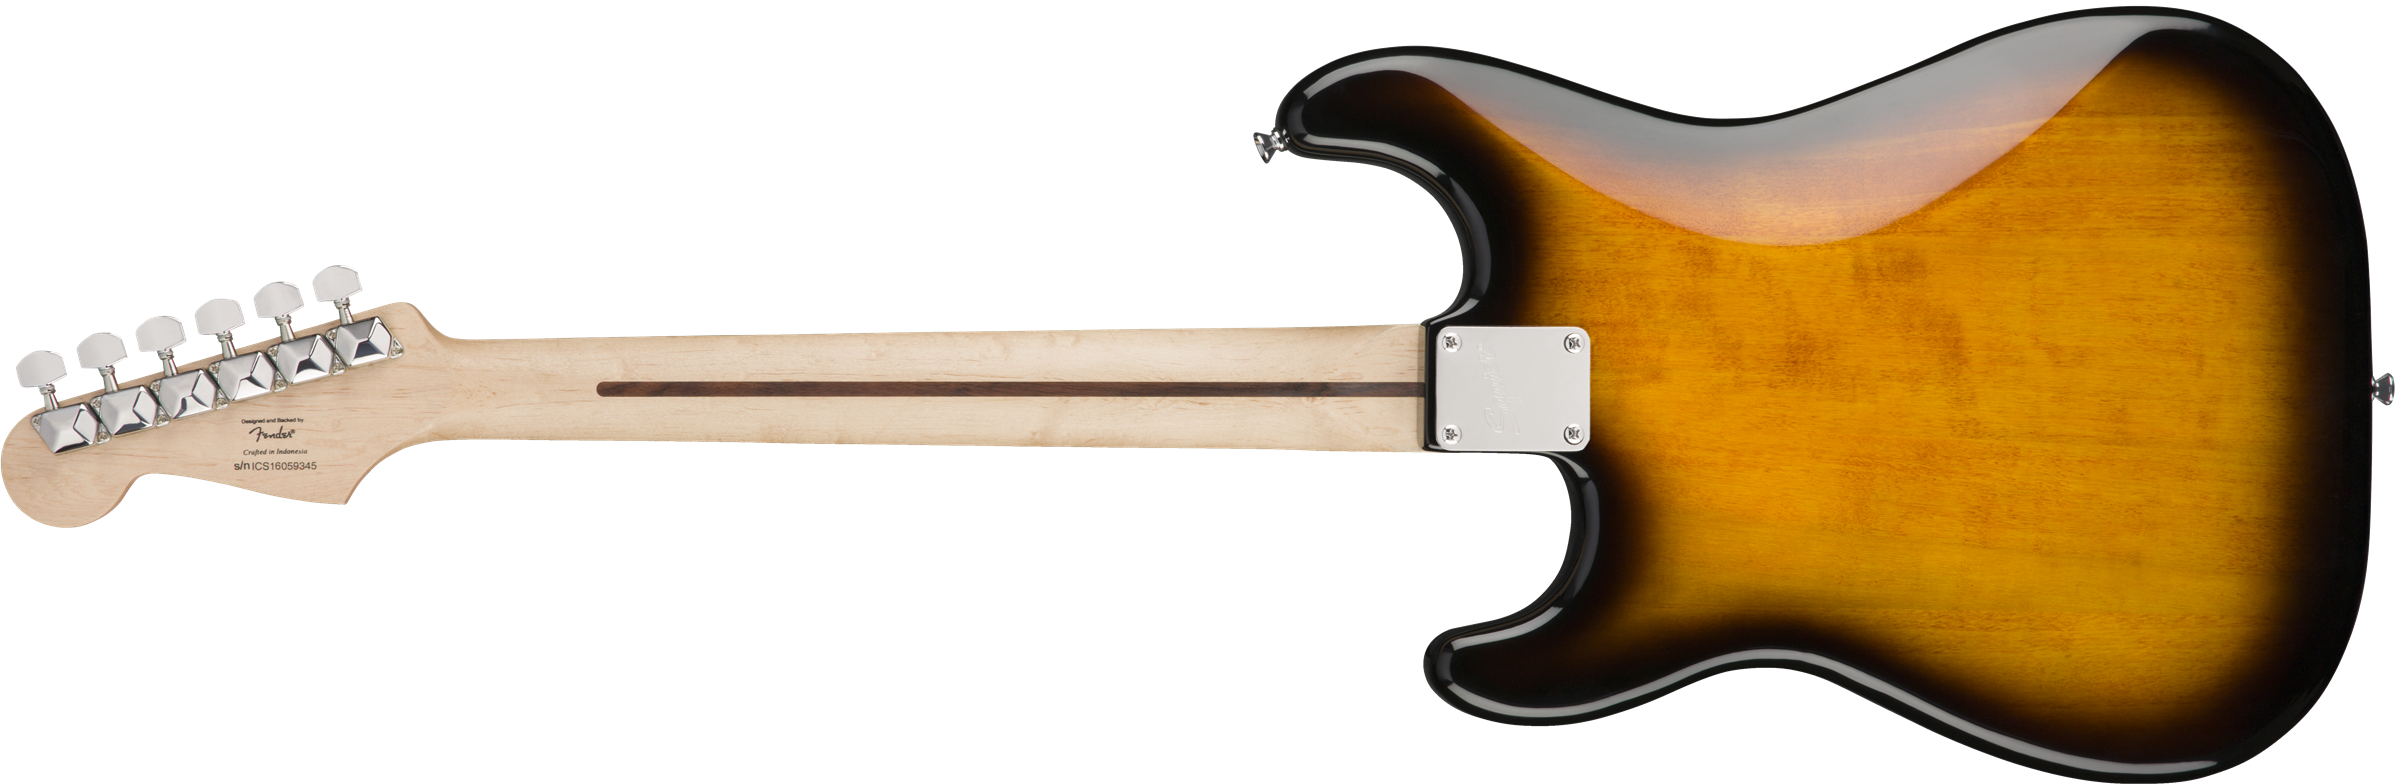 Squier Bullet Stratocaster Ht Sss Lau - Brown Sunburst - Guitarra eléctrica con forma de str. - Variation 1